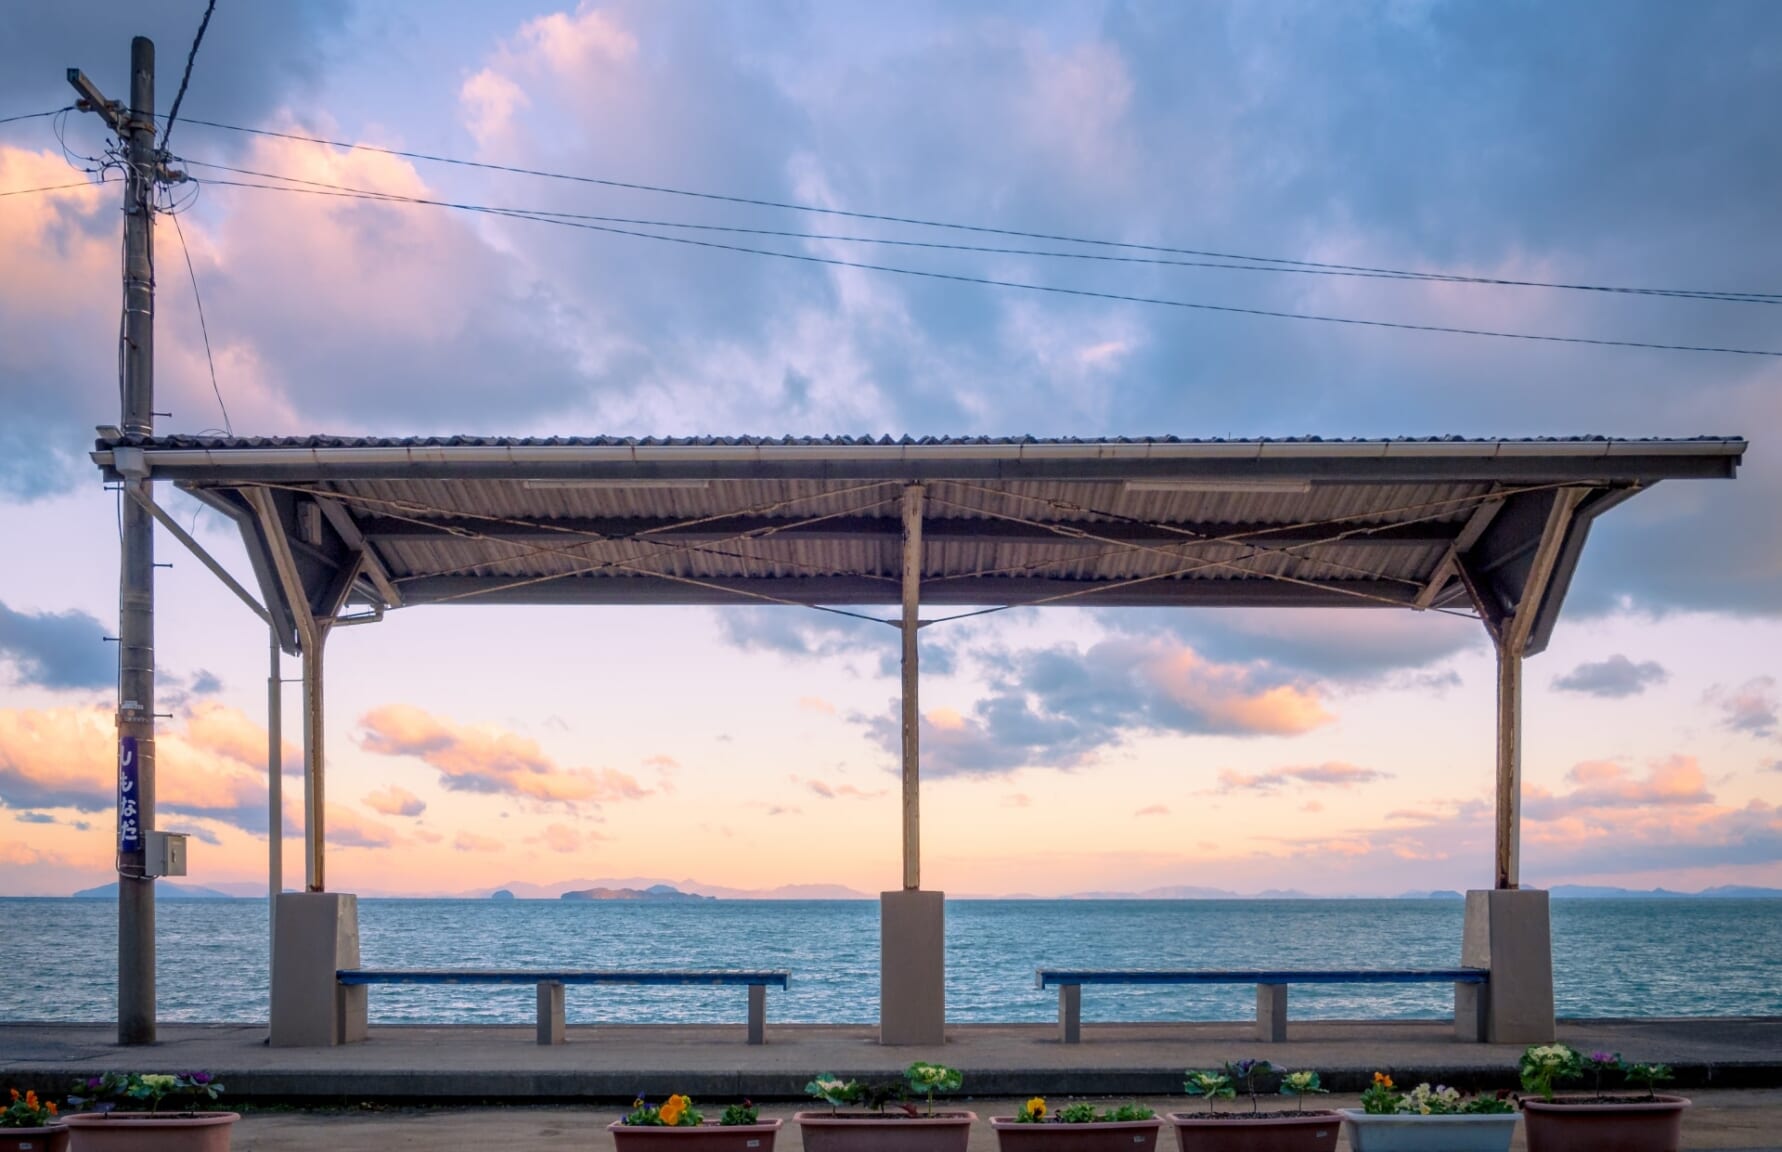 Shimonada Station overlooking the sea